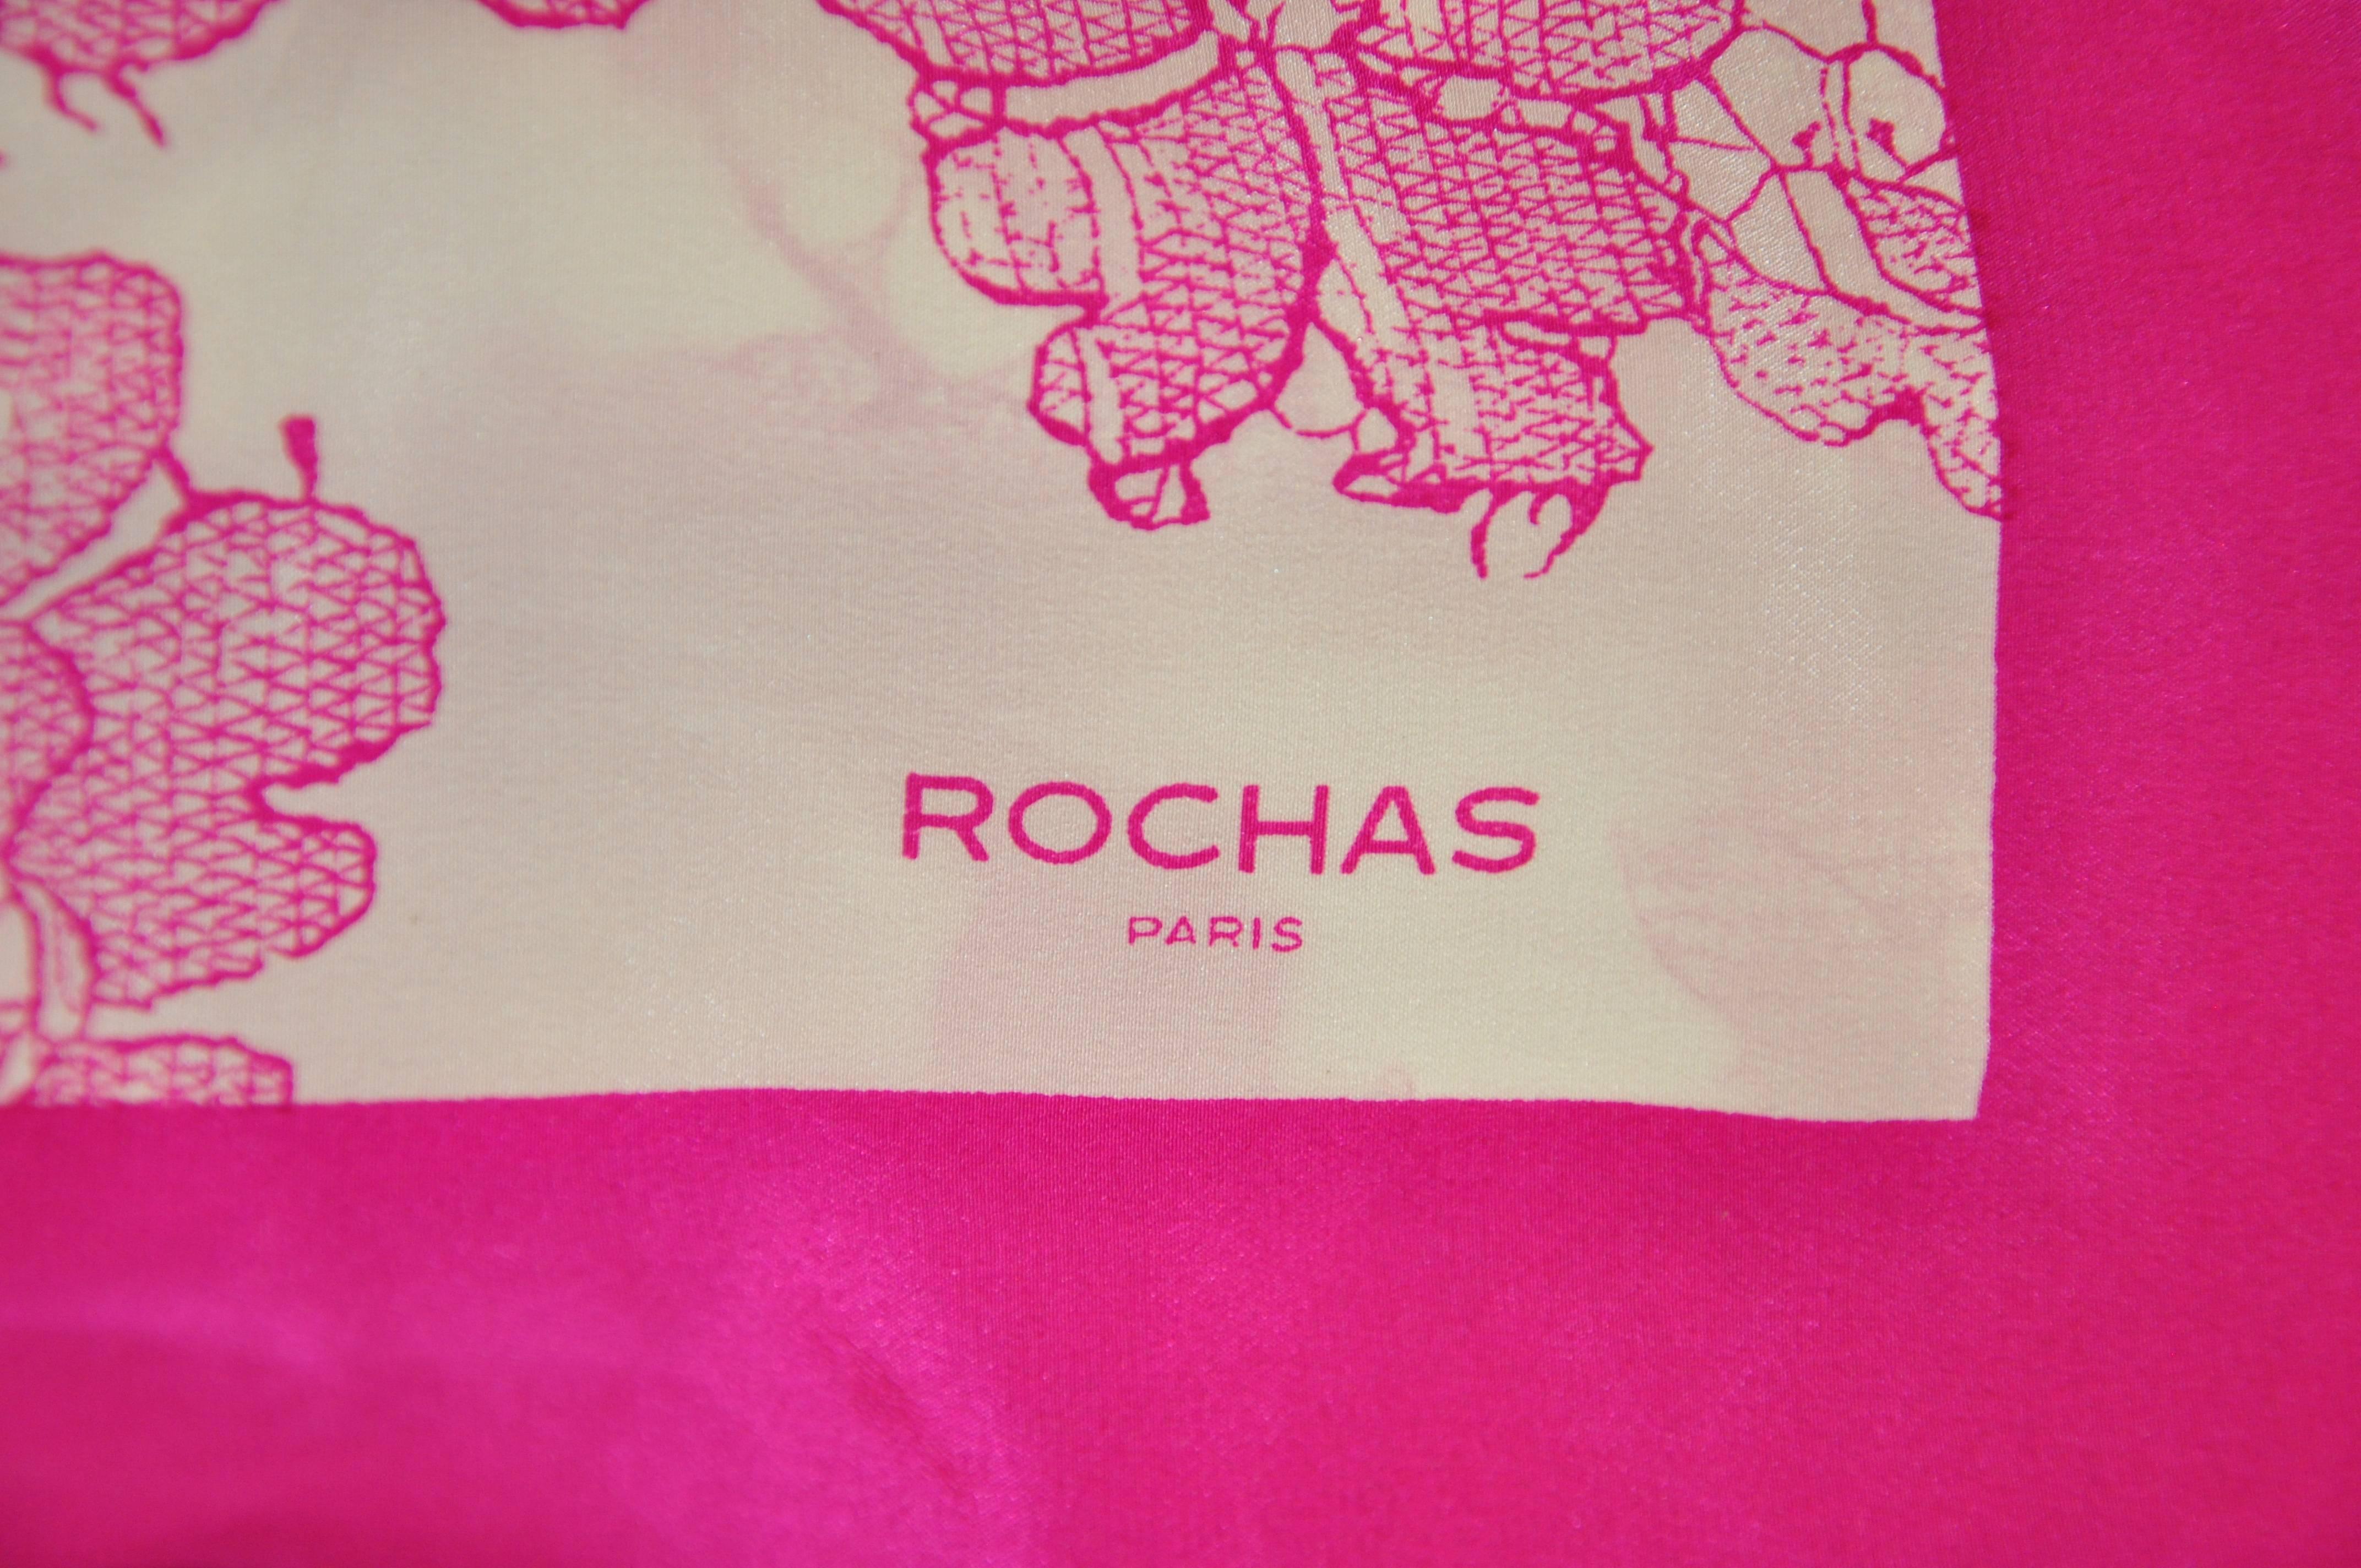     Rochas wonderfully huge fuchsia with cream multi-floral silk scarf measures 54